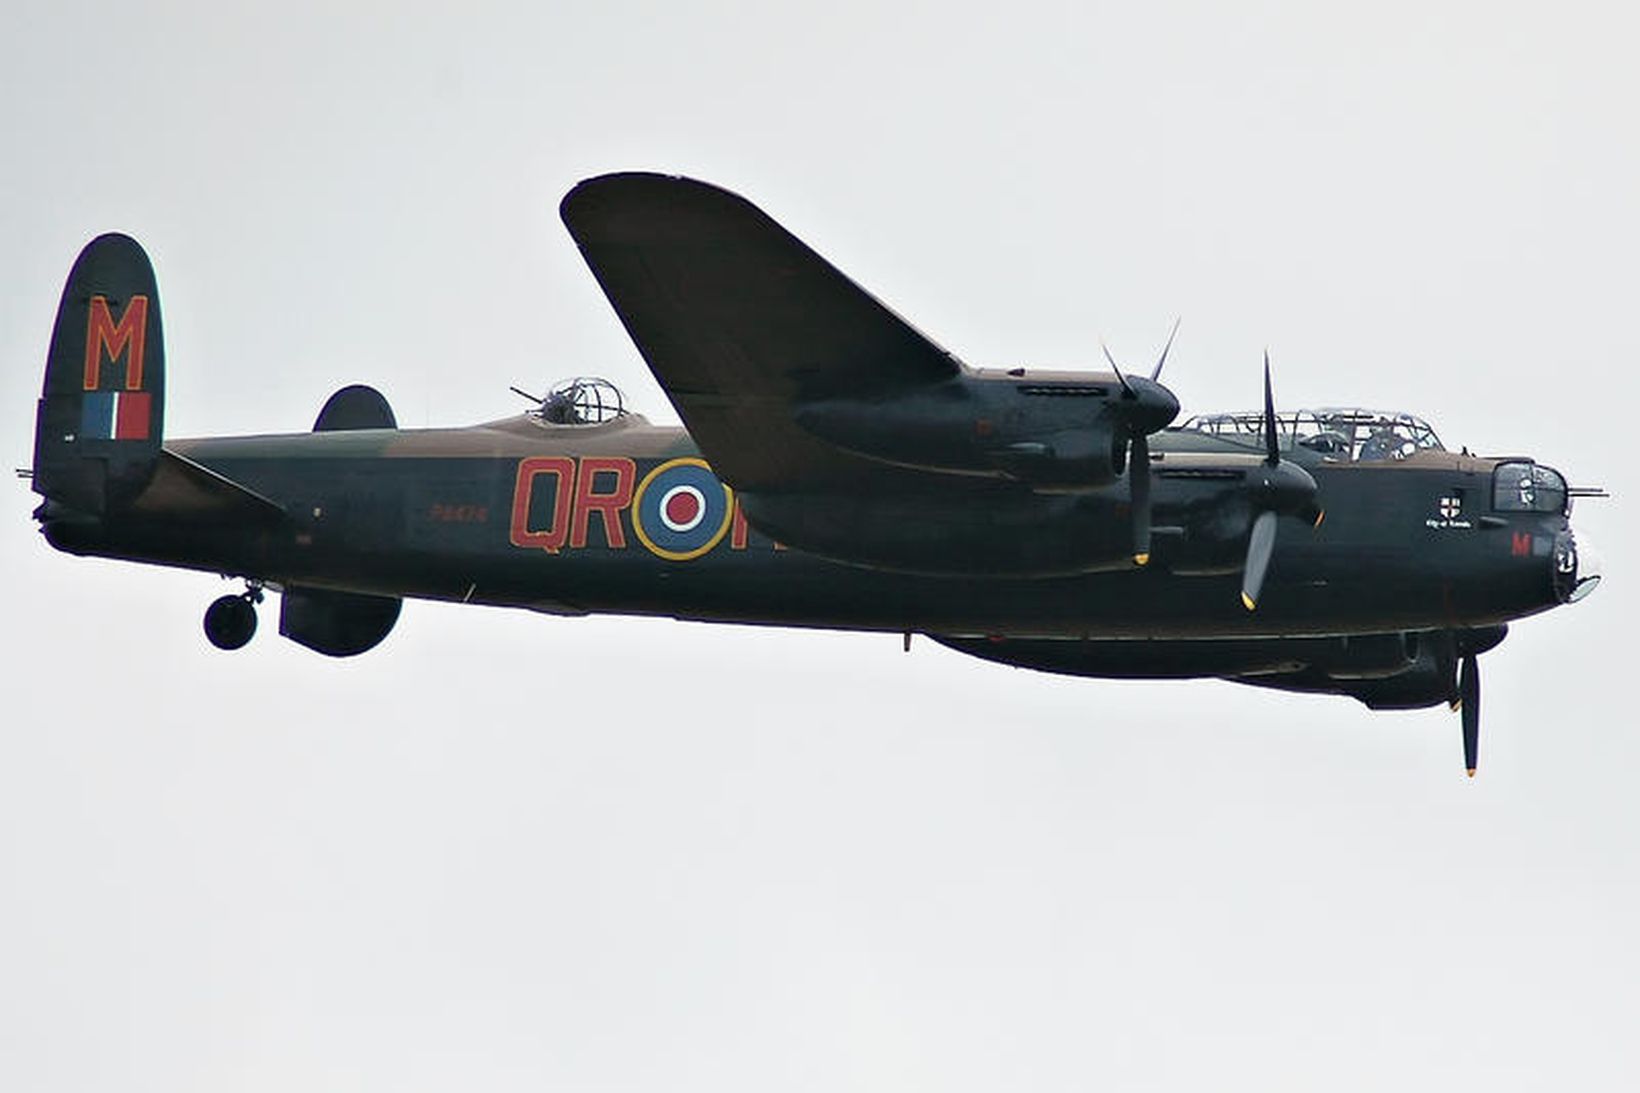 Sprengjuflugvélin Avro Lancaster Mk X